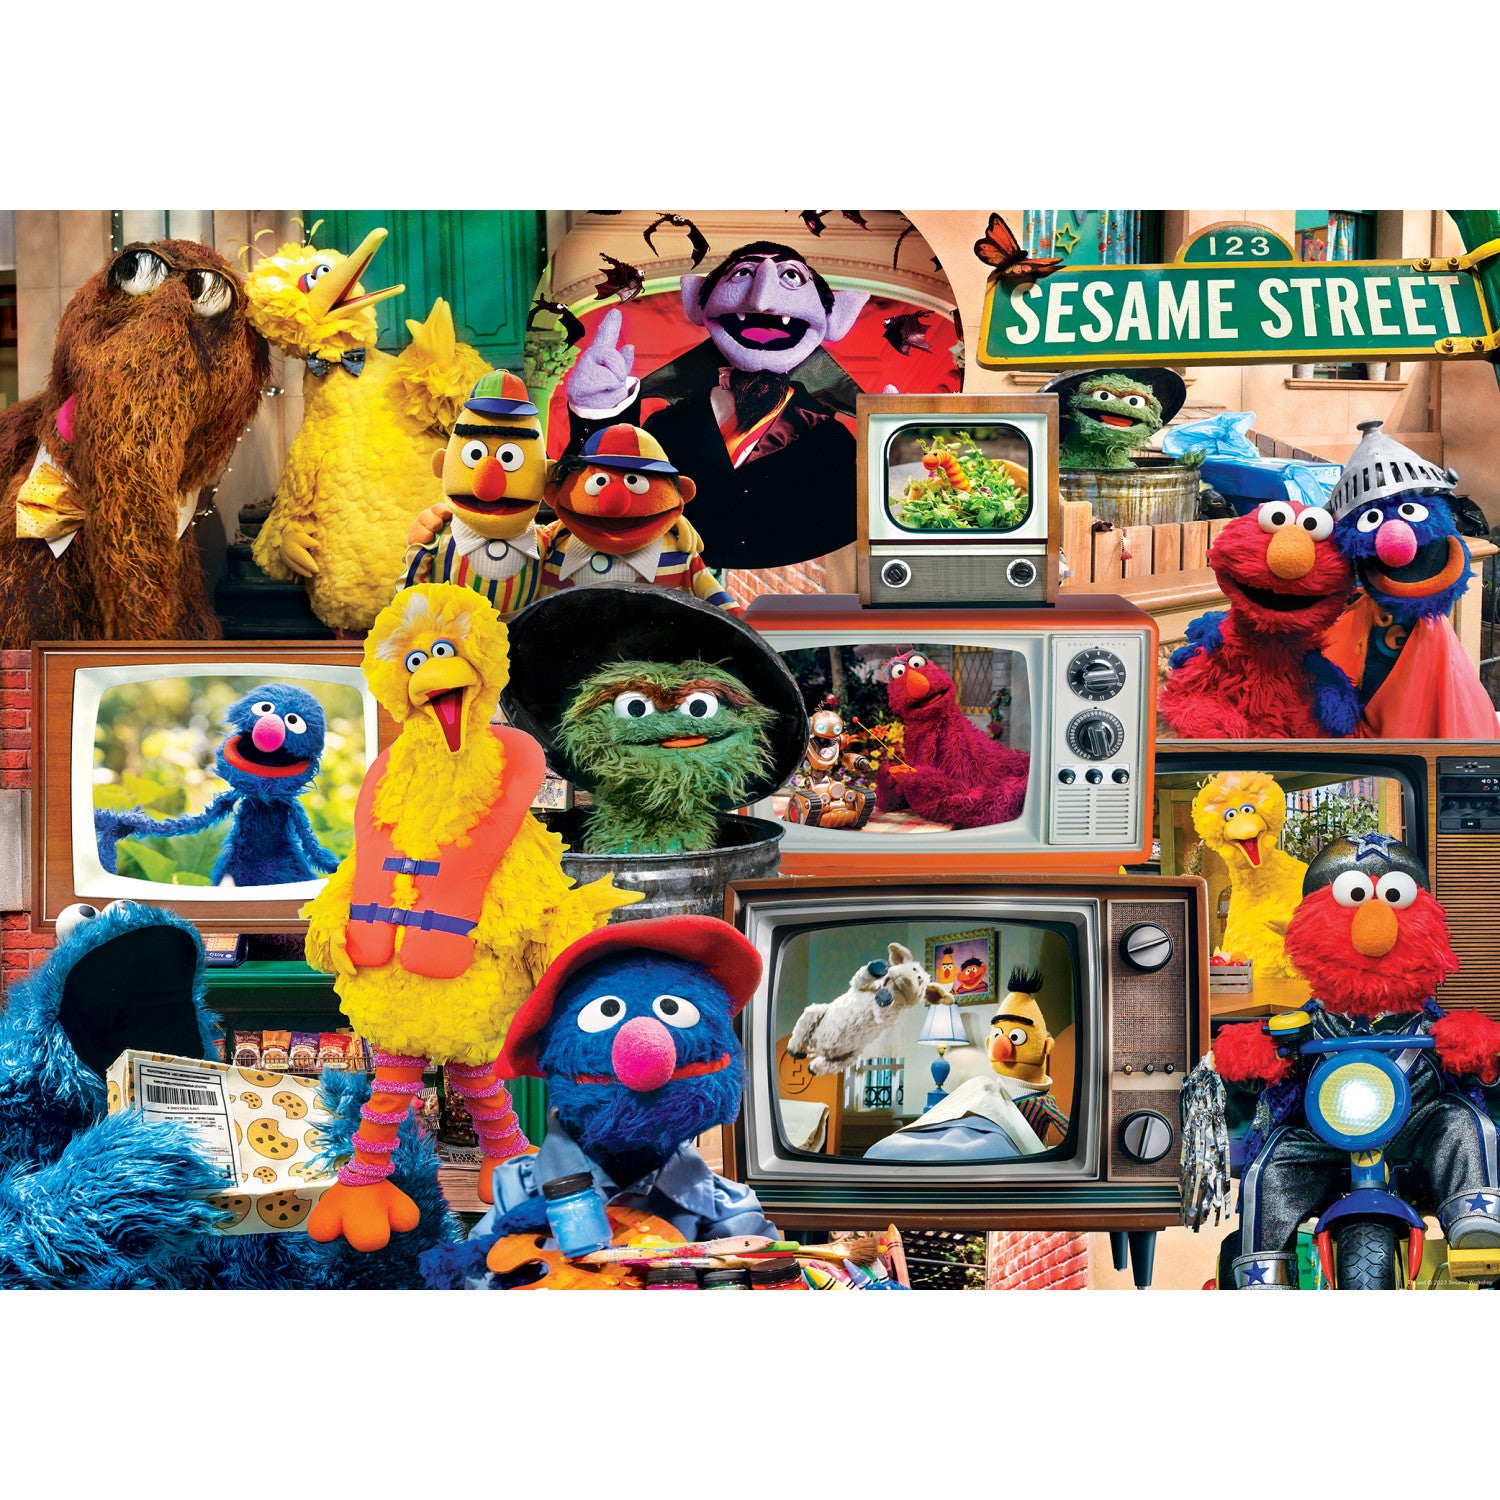 Sesame Street - Big Bird's Block Party 1000 Piece Puzzle